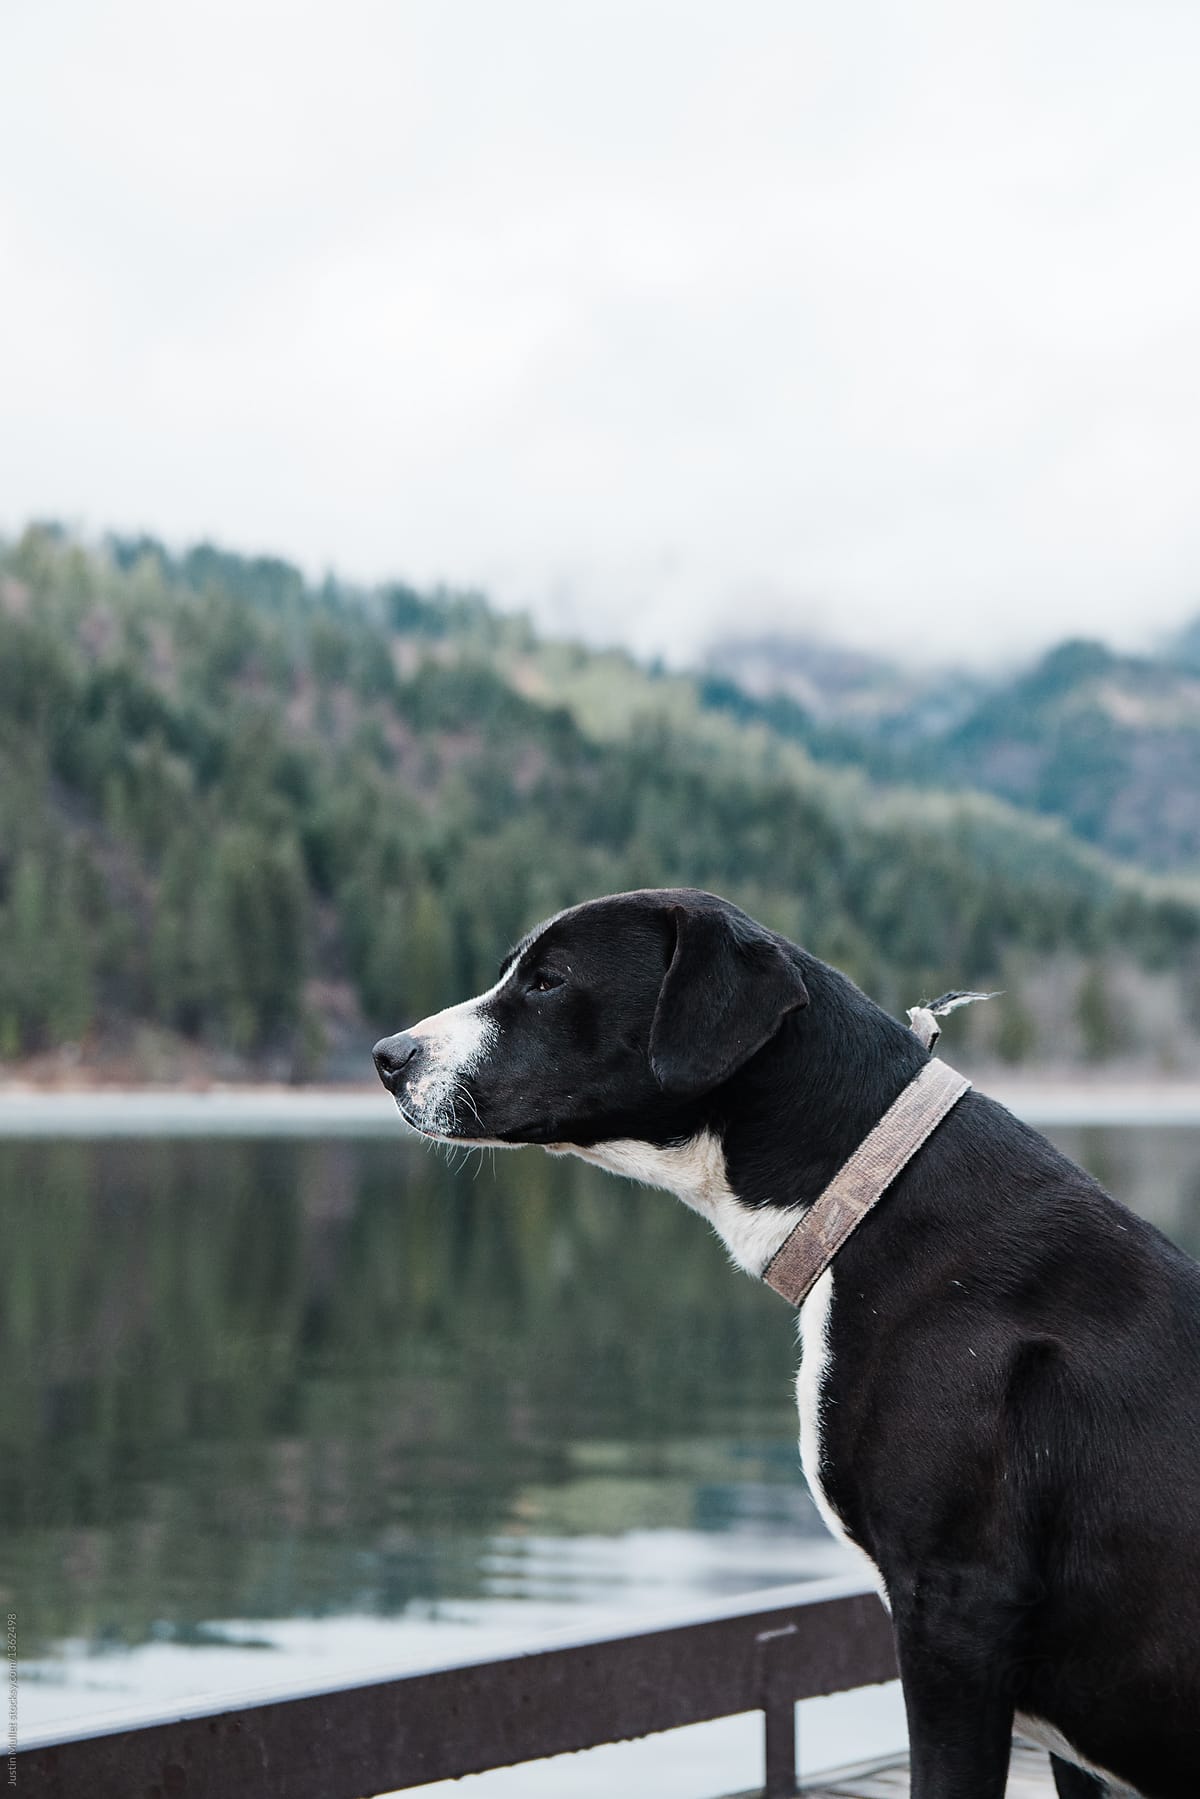 Dog looking across a lake